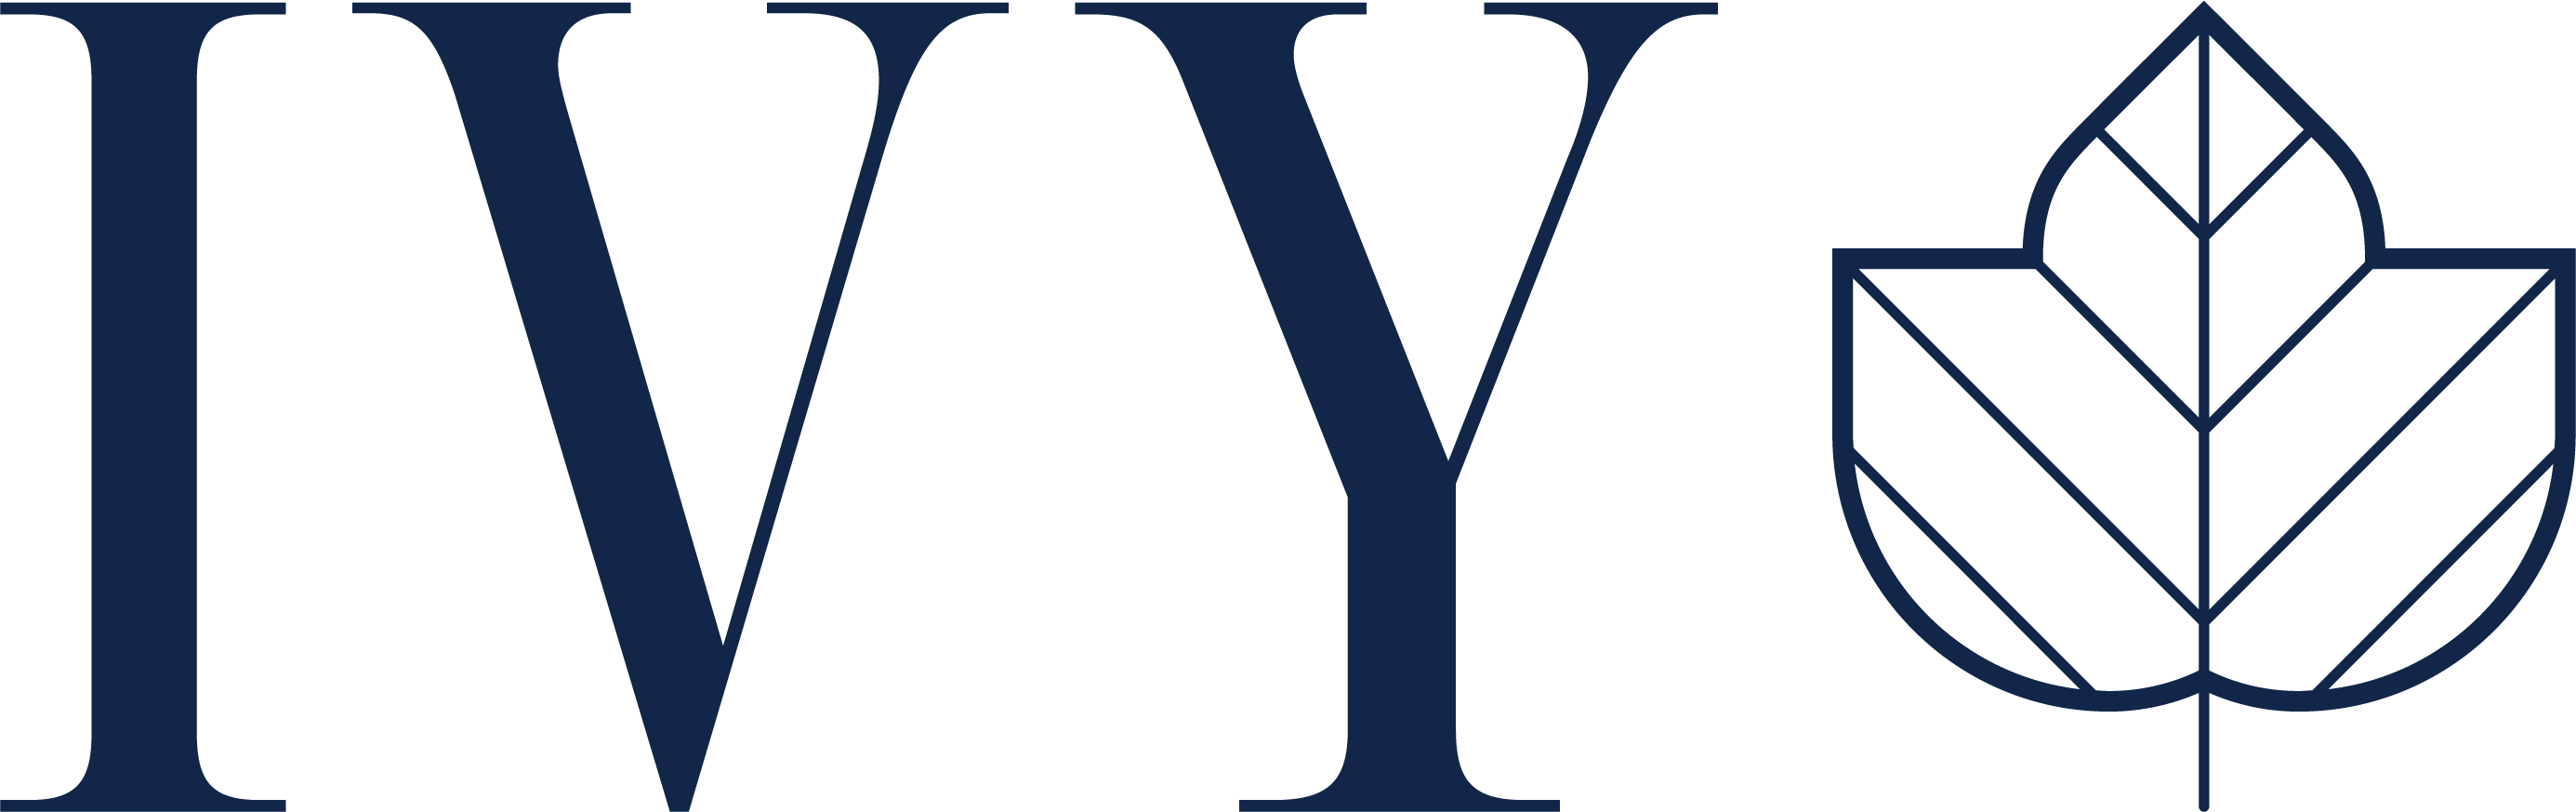 Ivy Logo - Business Management Software For Designers | Ivy